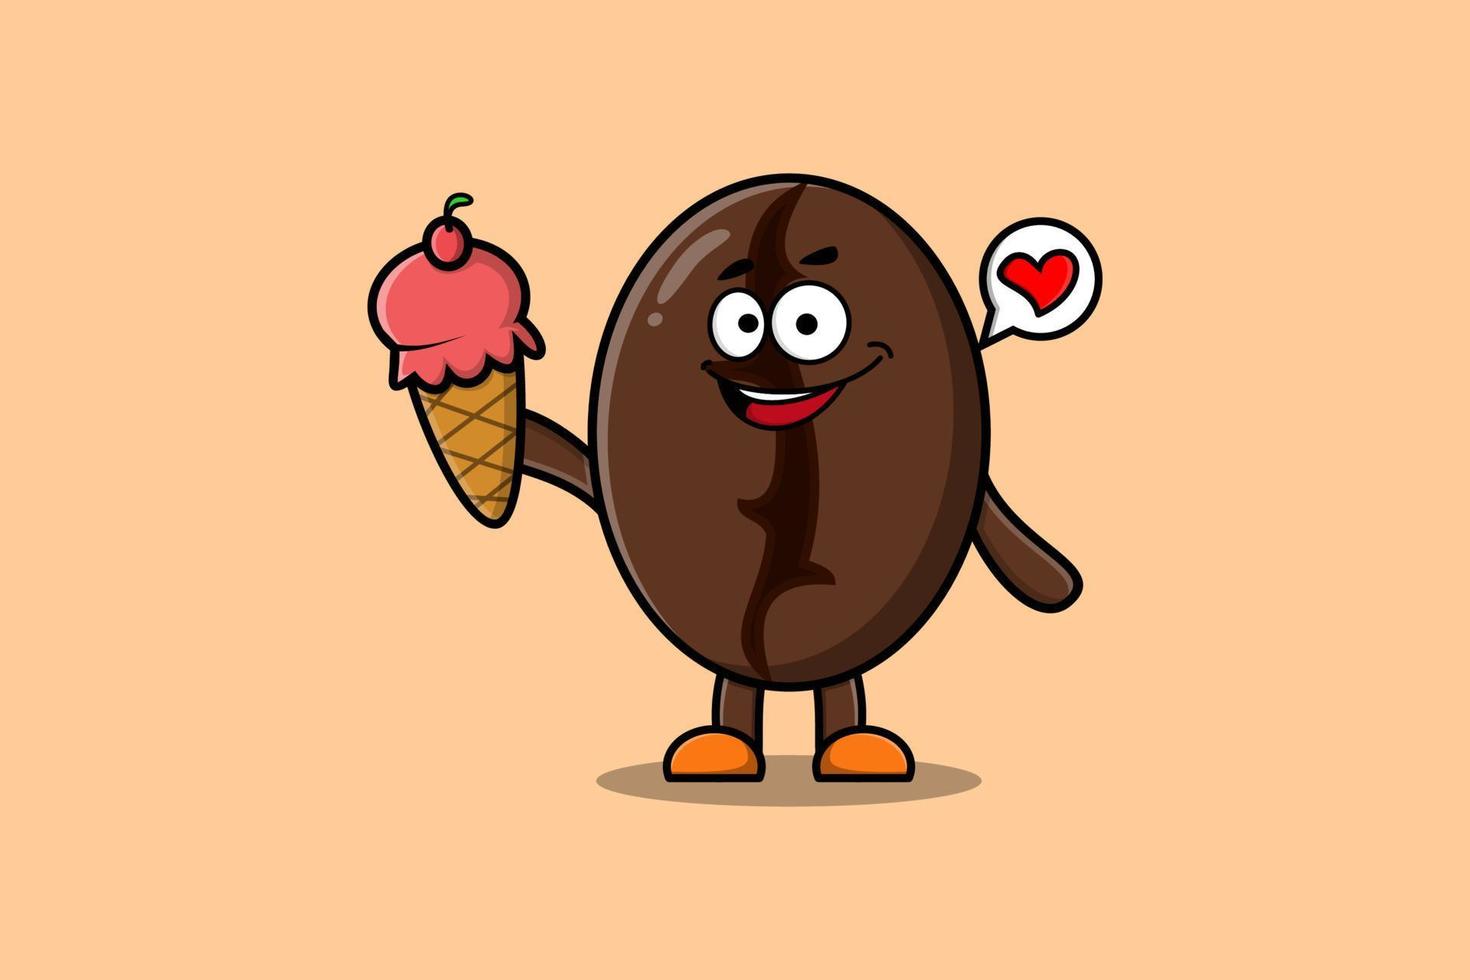 Cute Cartoon Coffee beans holding ice cream cone vector